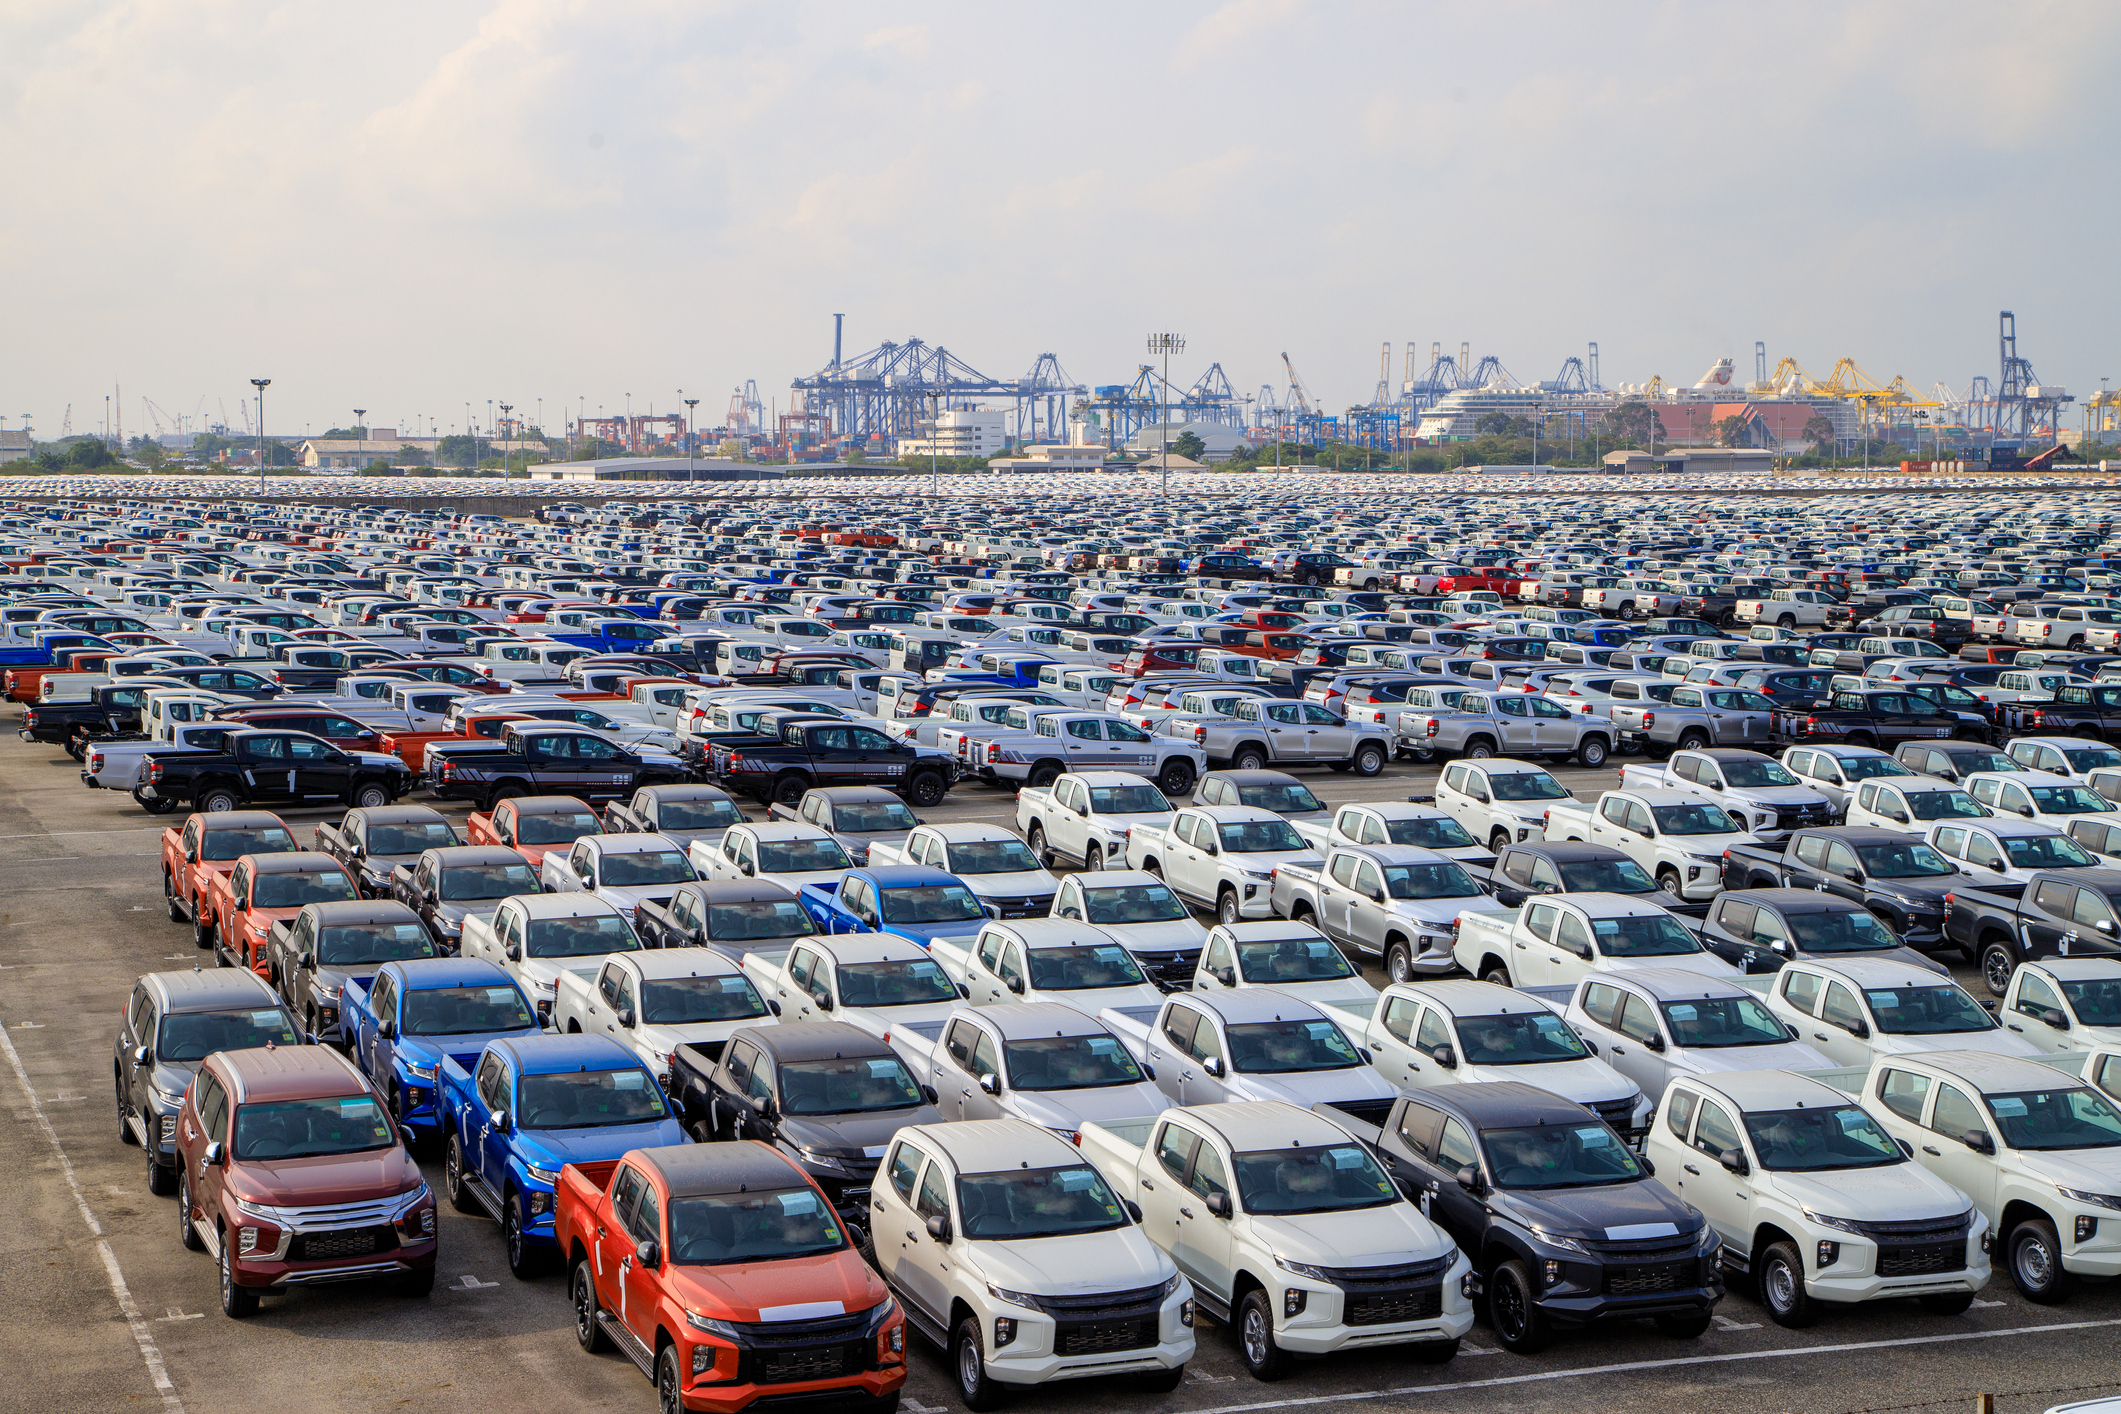 Thai New Car Market Drops 30% in March